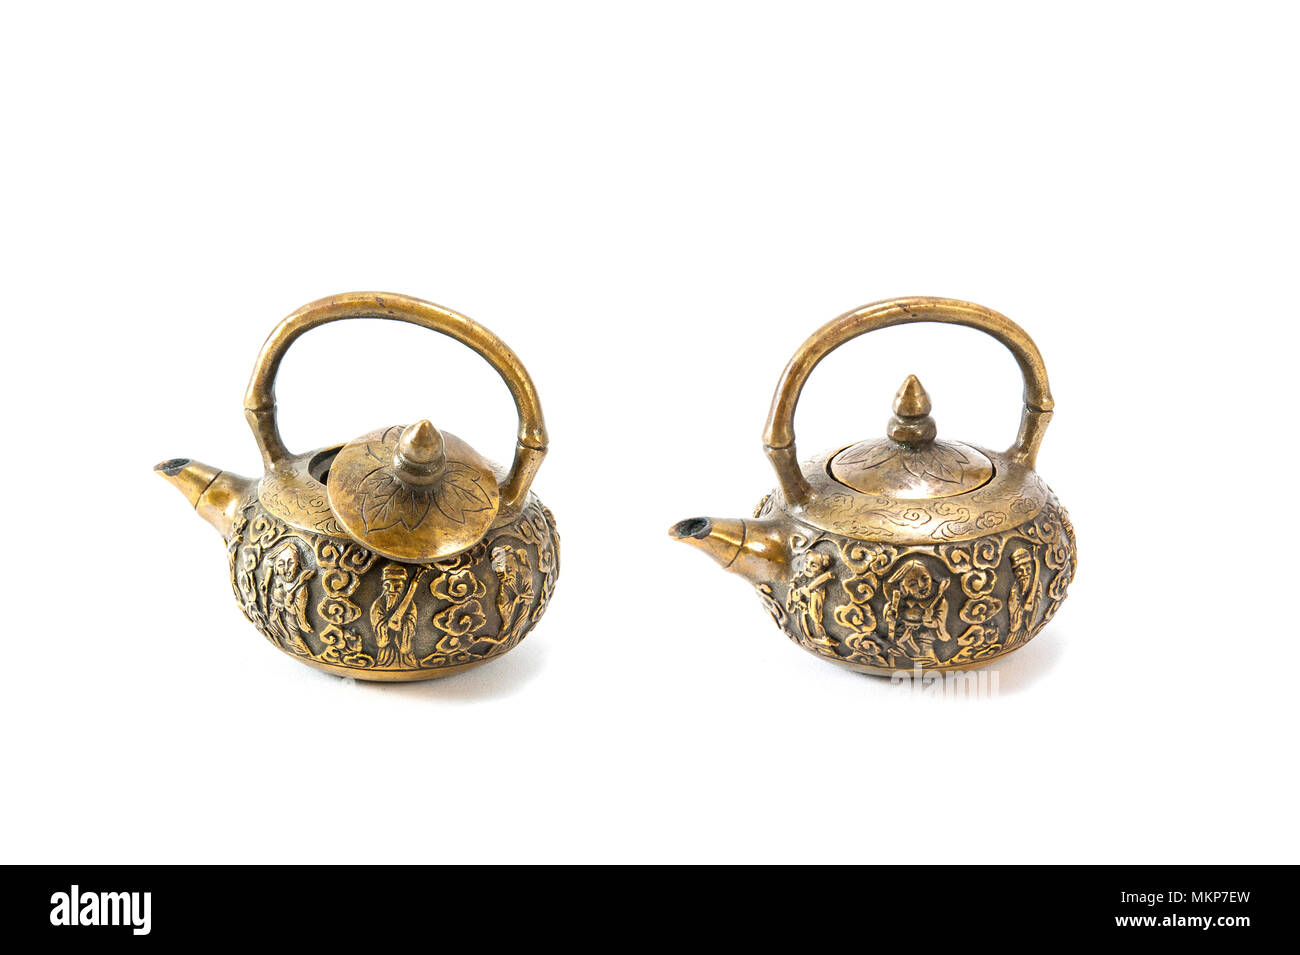 Miniature antique brass teapot isolated on white background Stock Photo -  Alamy